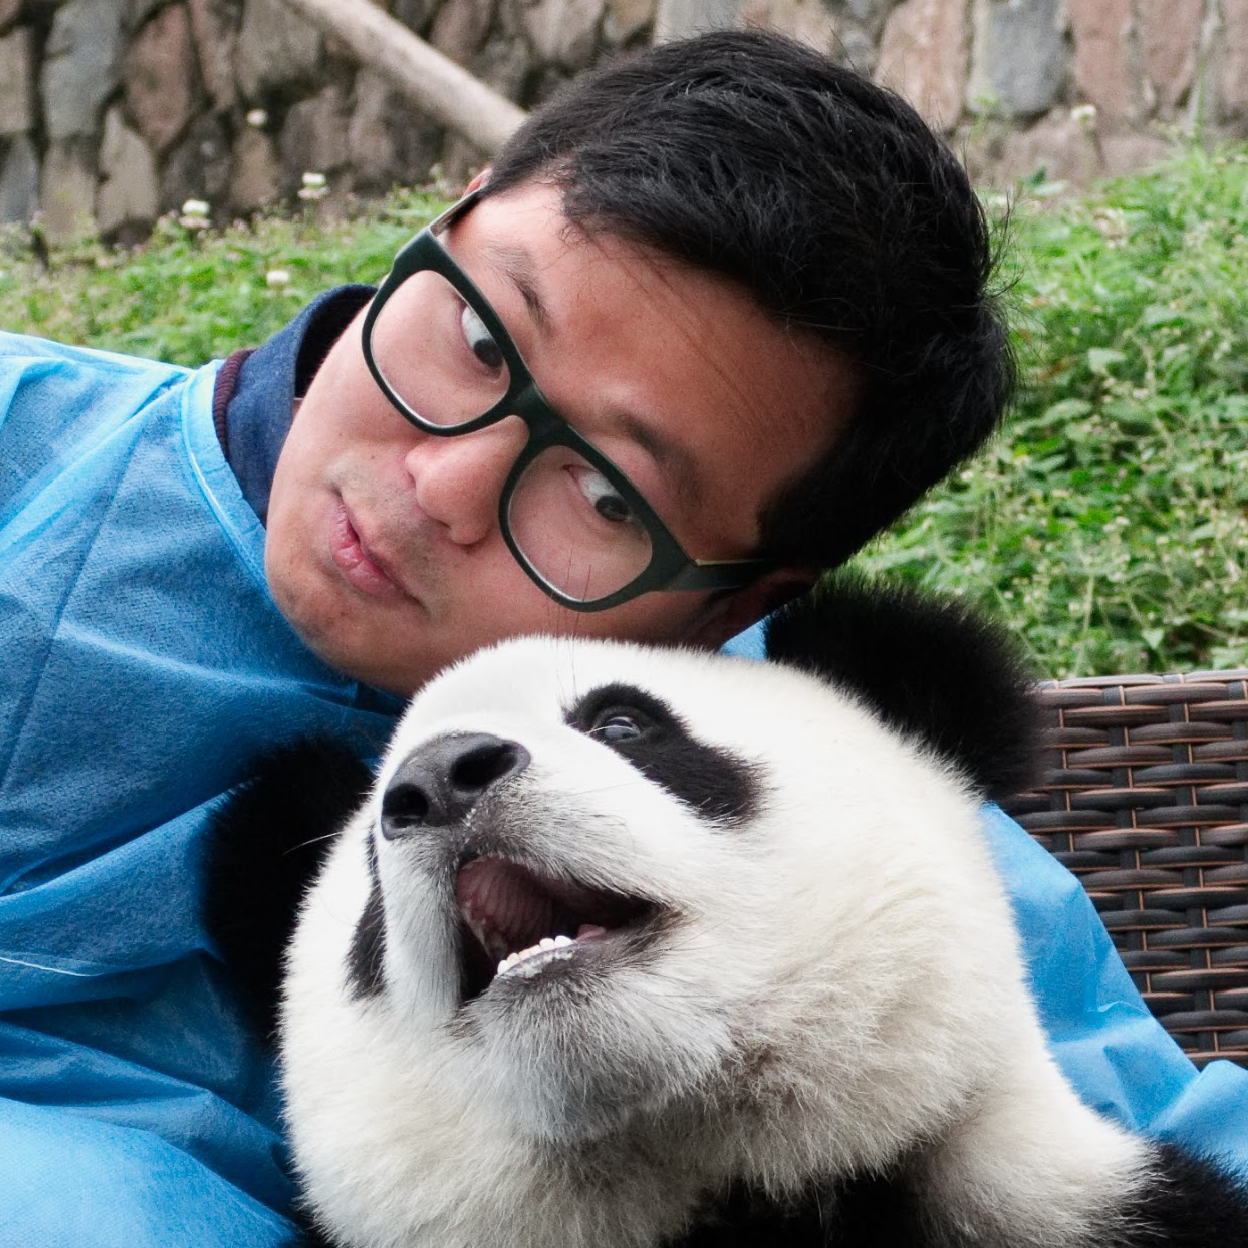 Ben with a baby panda